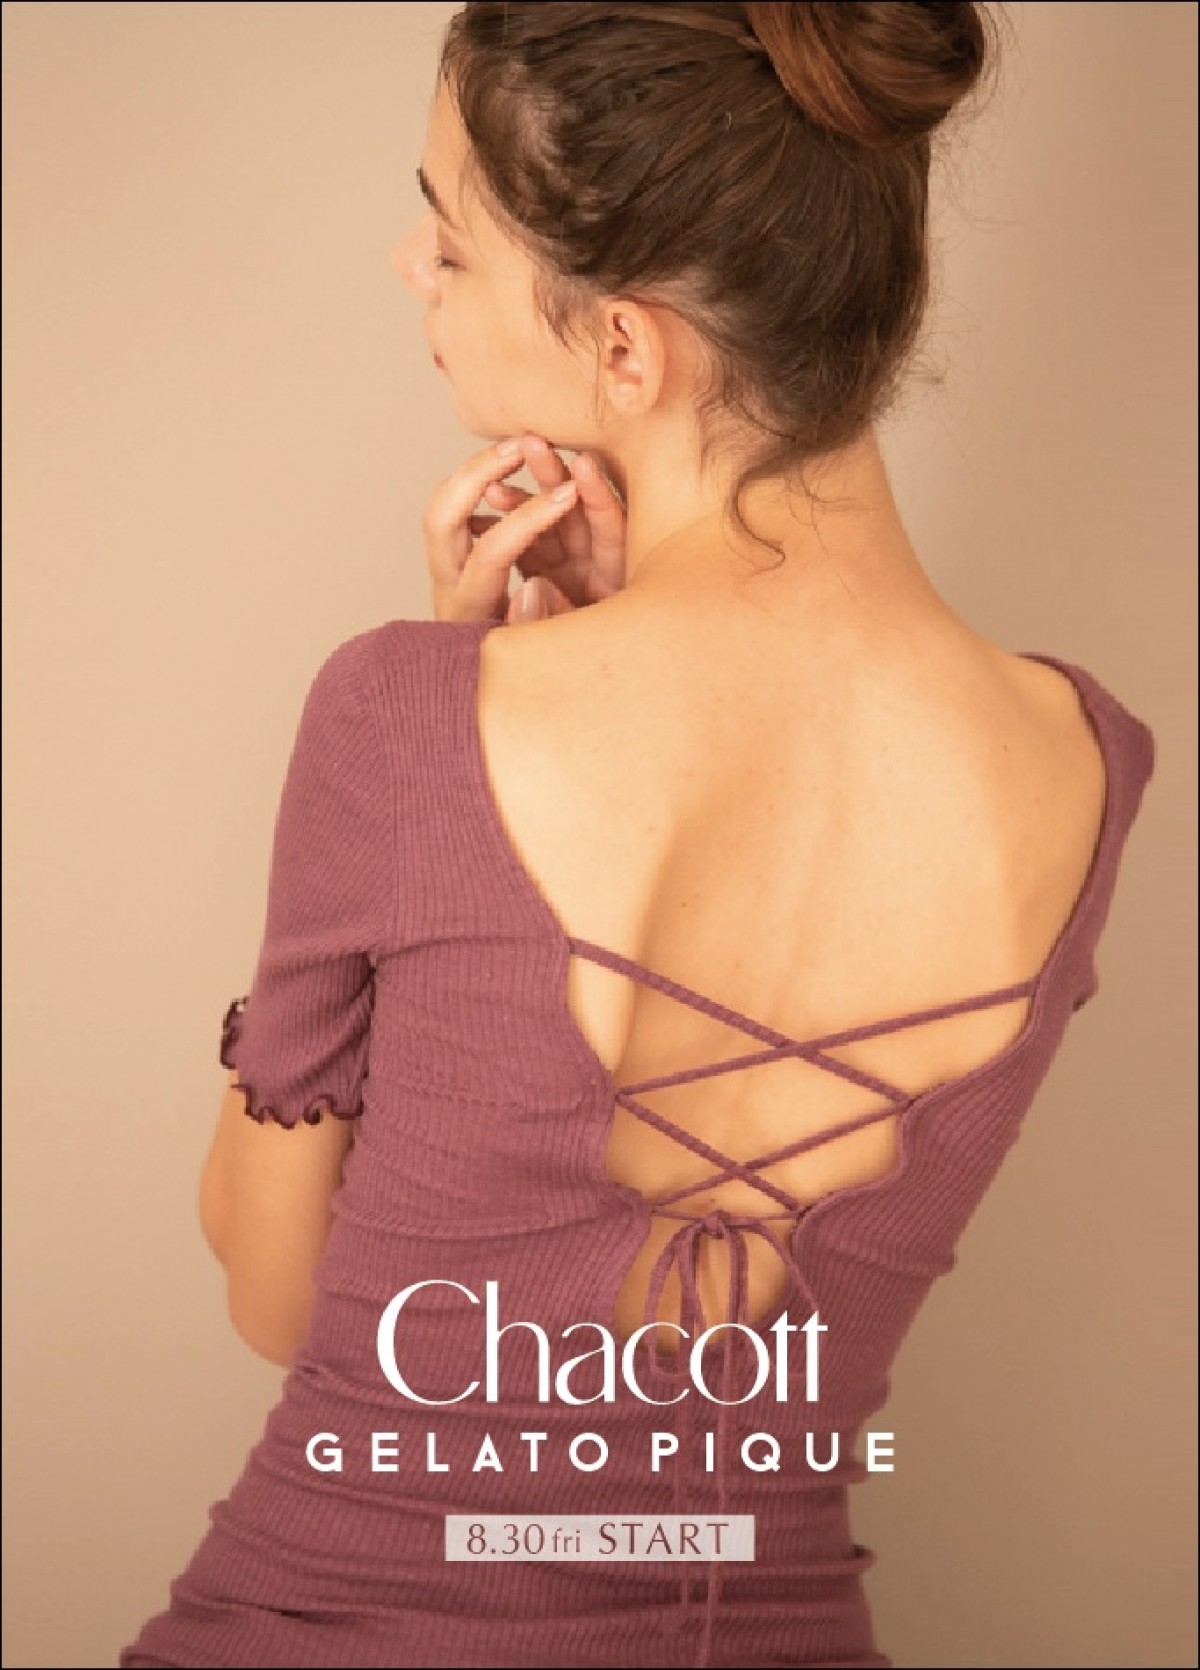 「Chacott」と「gelato pique」が初コラボ、ルームウェア発売